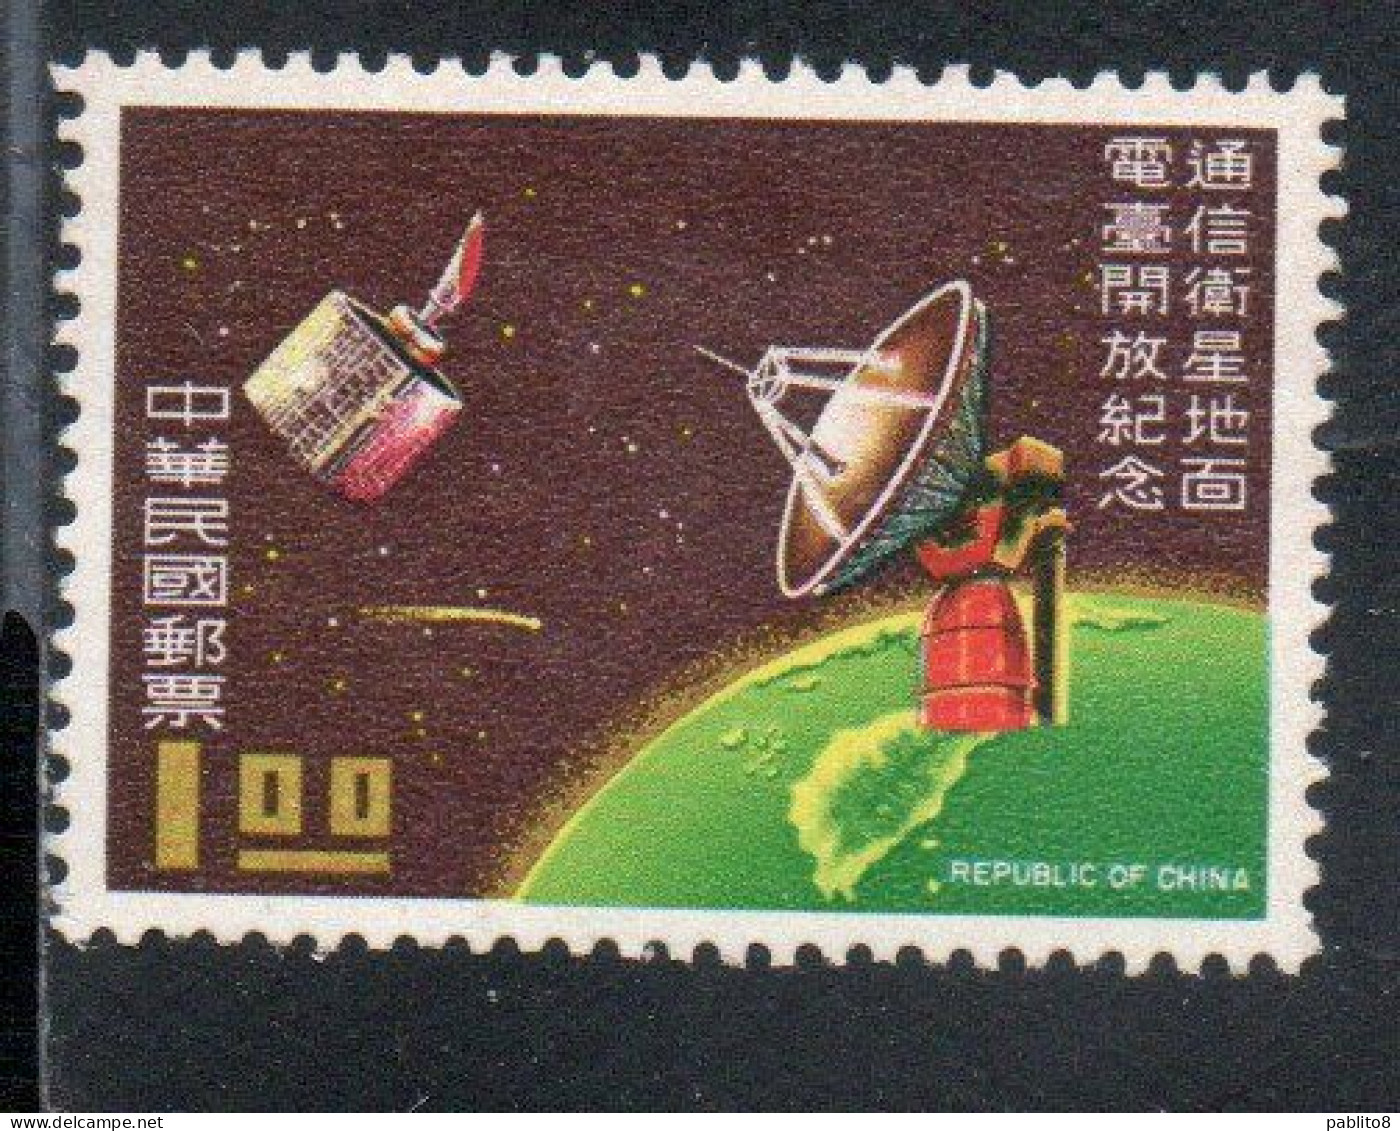 CHINA REPUBLIC CINA TAIWAN FORMOSA 1969 SPACE COMMUNICATION SATELLITE EARTH STATION AT CHIN-SHAN-LI 1$ MNH - Nuevos